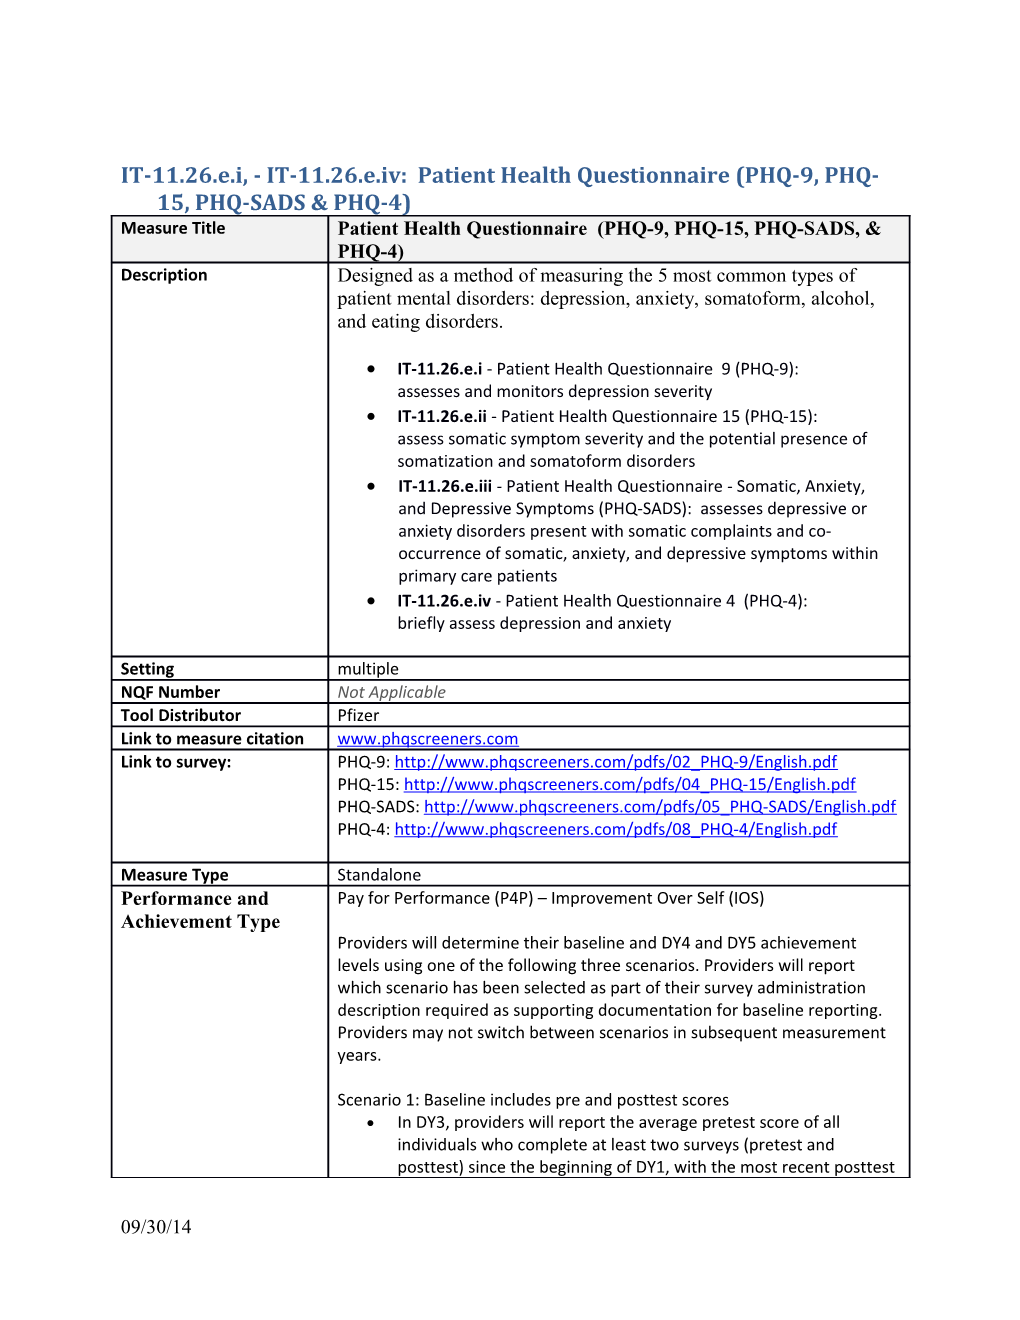 IT-11.26.E.I, - IT-11.26.E.Iv: Patient Health Questionnaire(PHQ-9, PHQ-15, PHQ-SADS & PHQ-4)